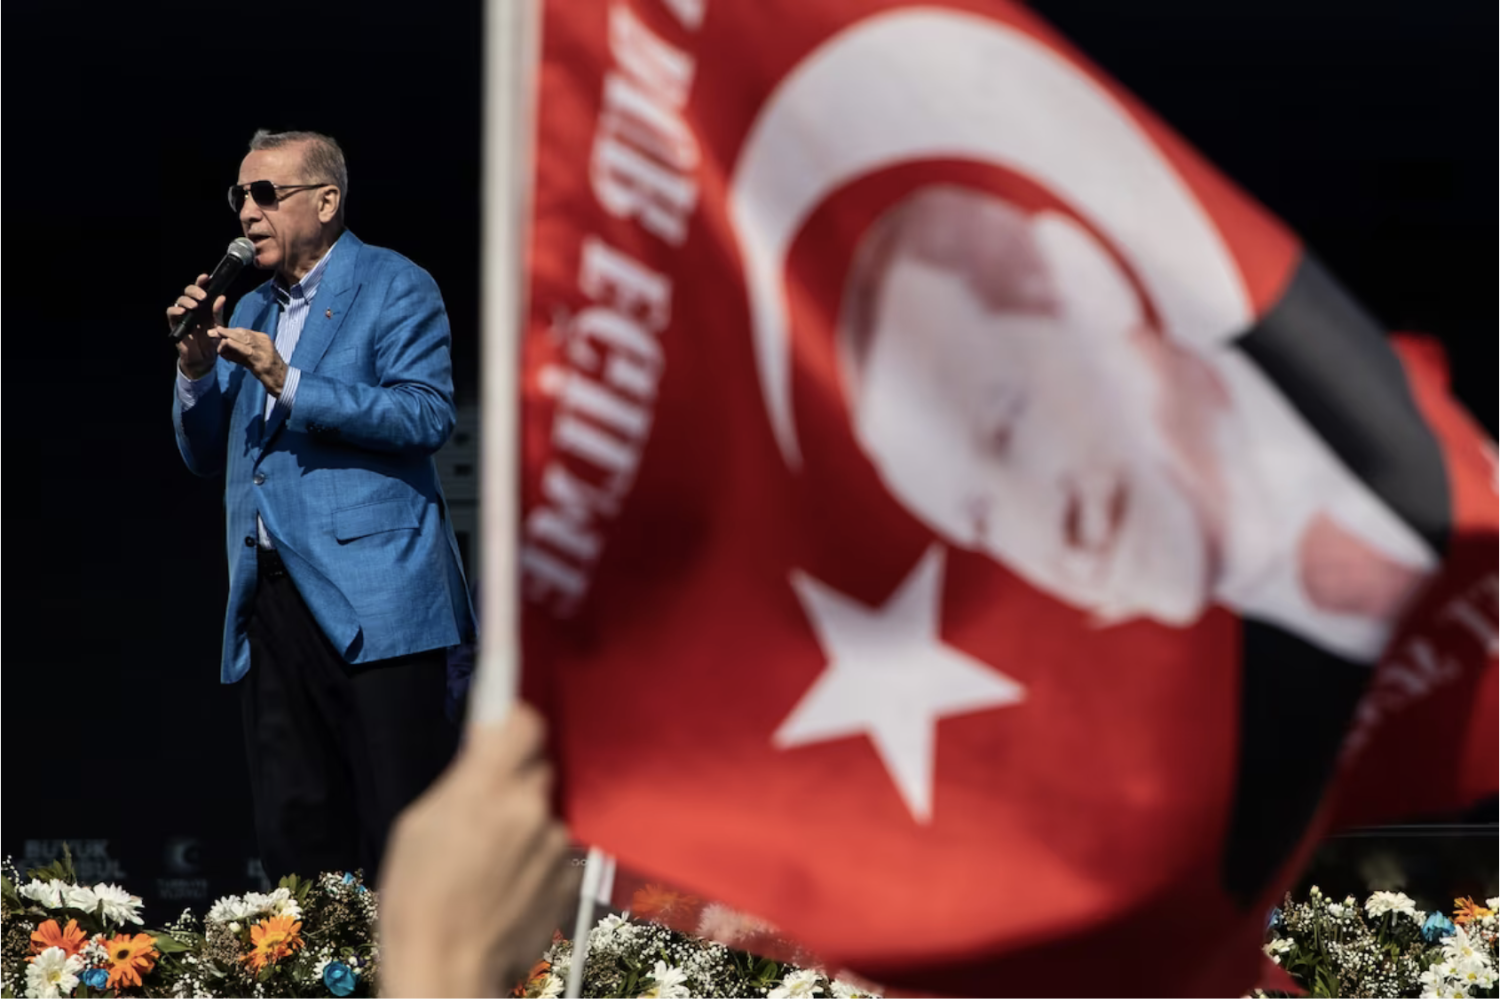 Erdogan’s political path from mayor to one-man rule of Turkey